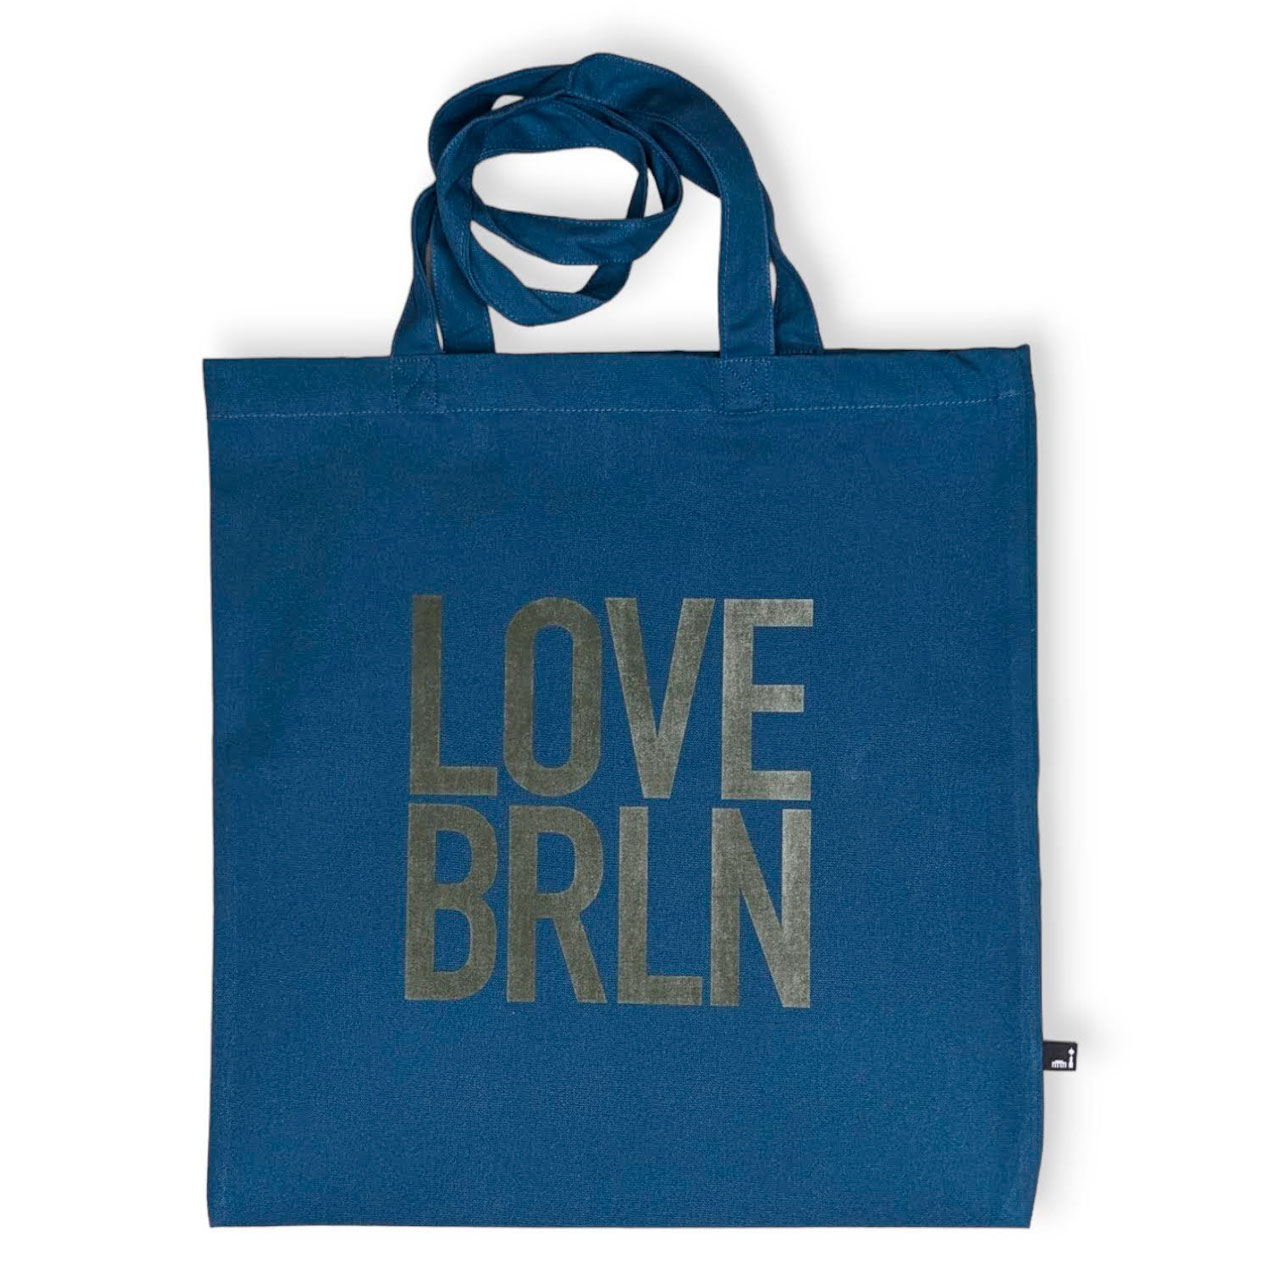 Love Berlin Canvas Bag blau/lila